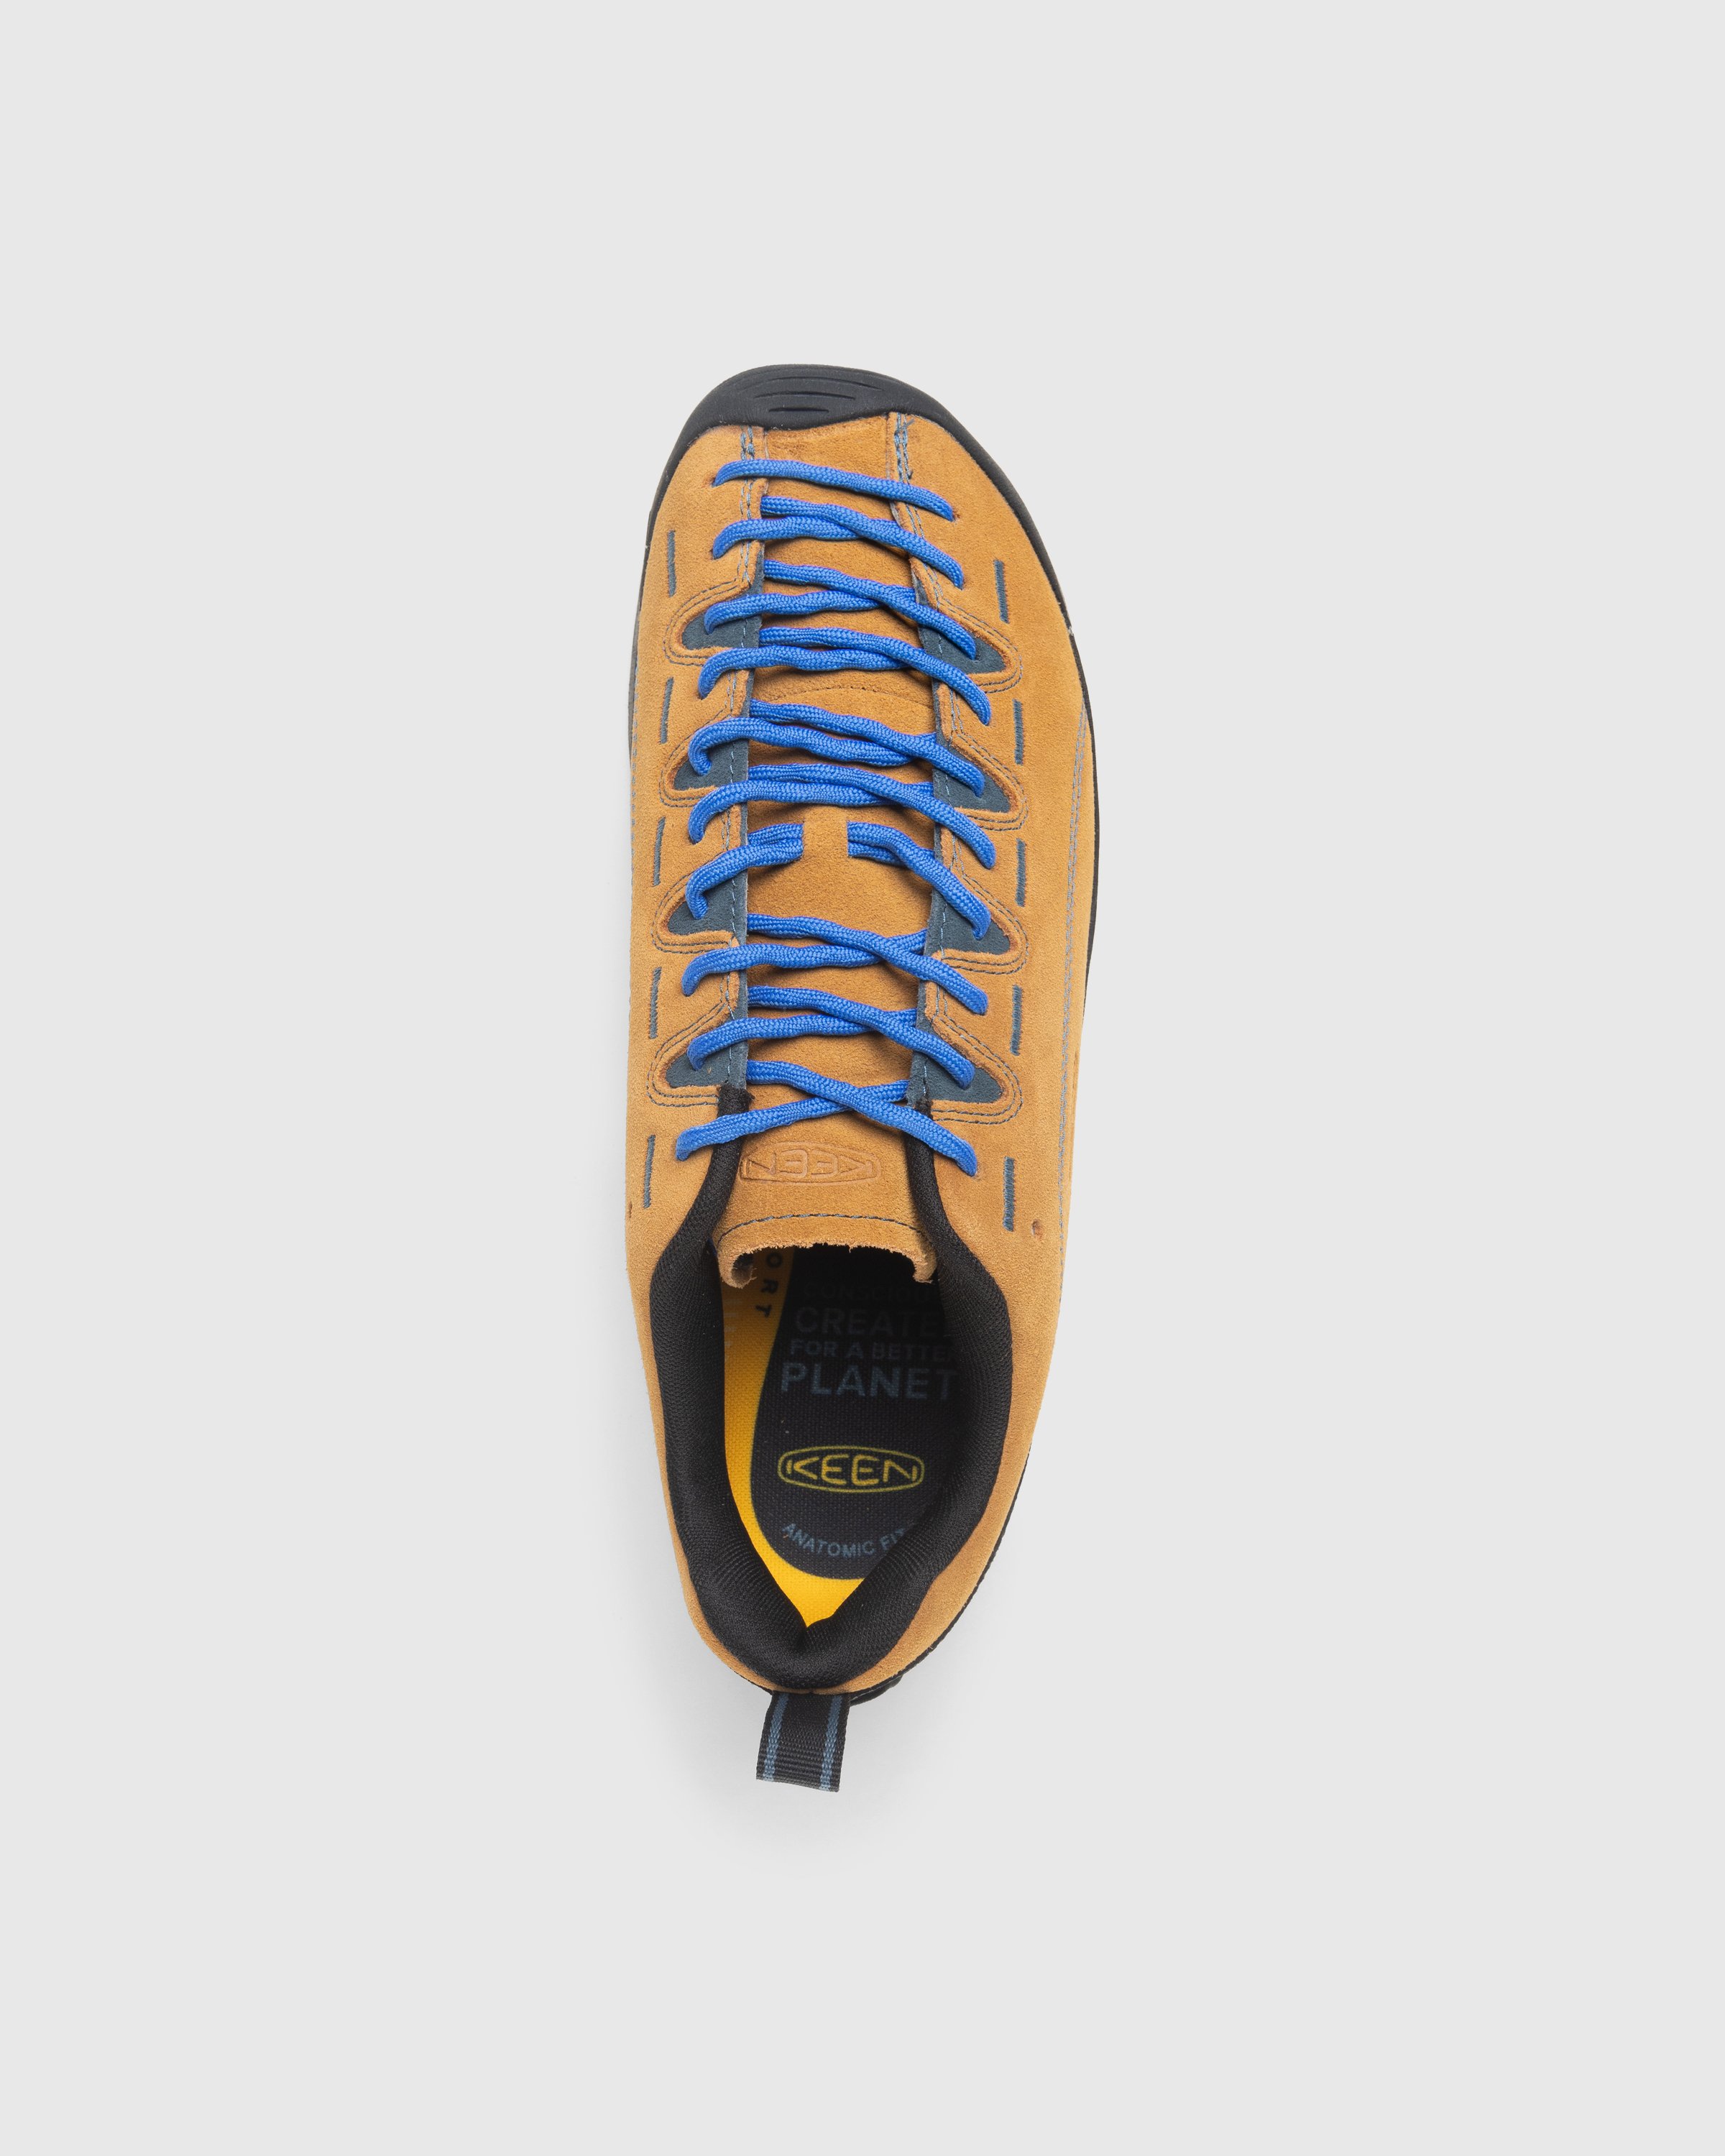 Keen - JASPER CATHAY SPICE/ORION BLUE - Footwear - Multi - Image 6